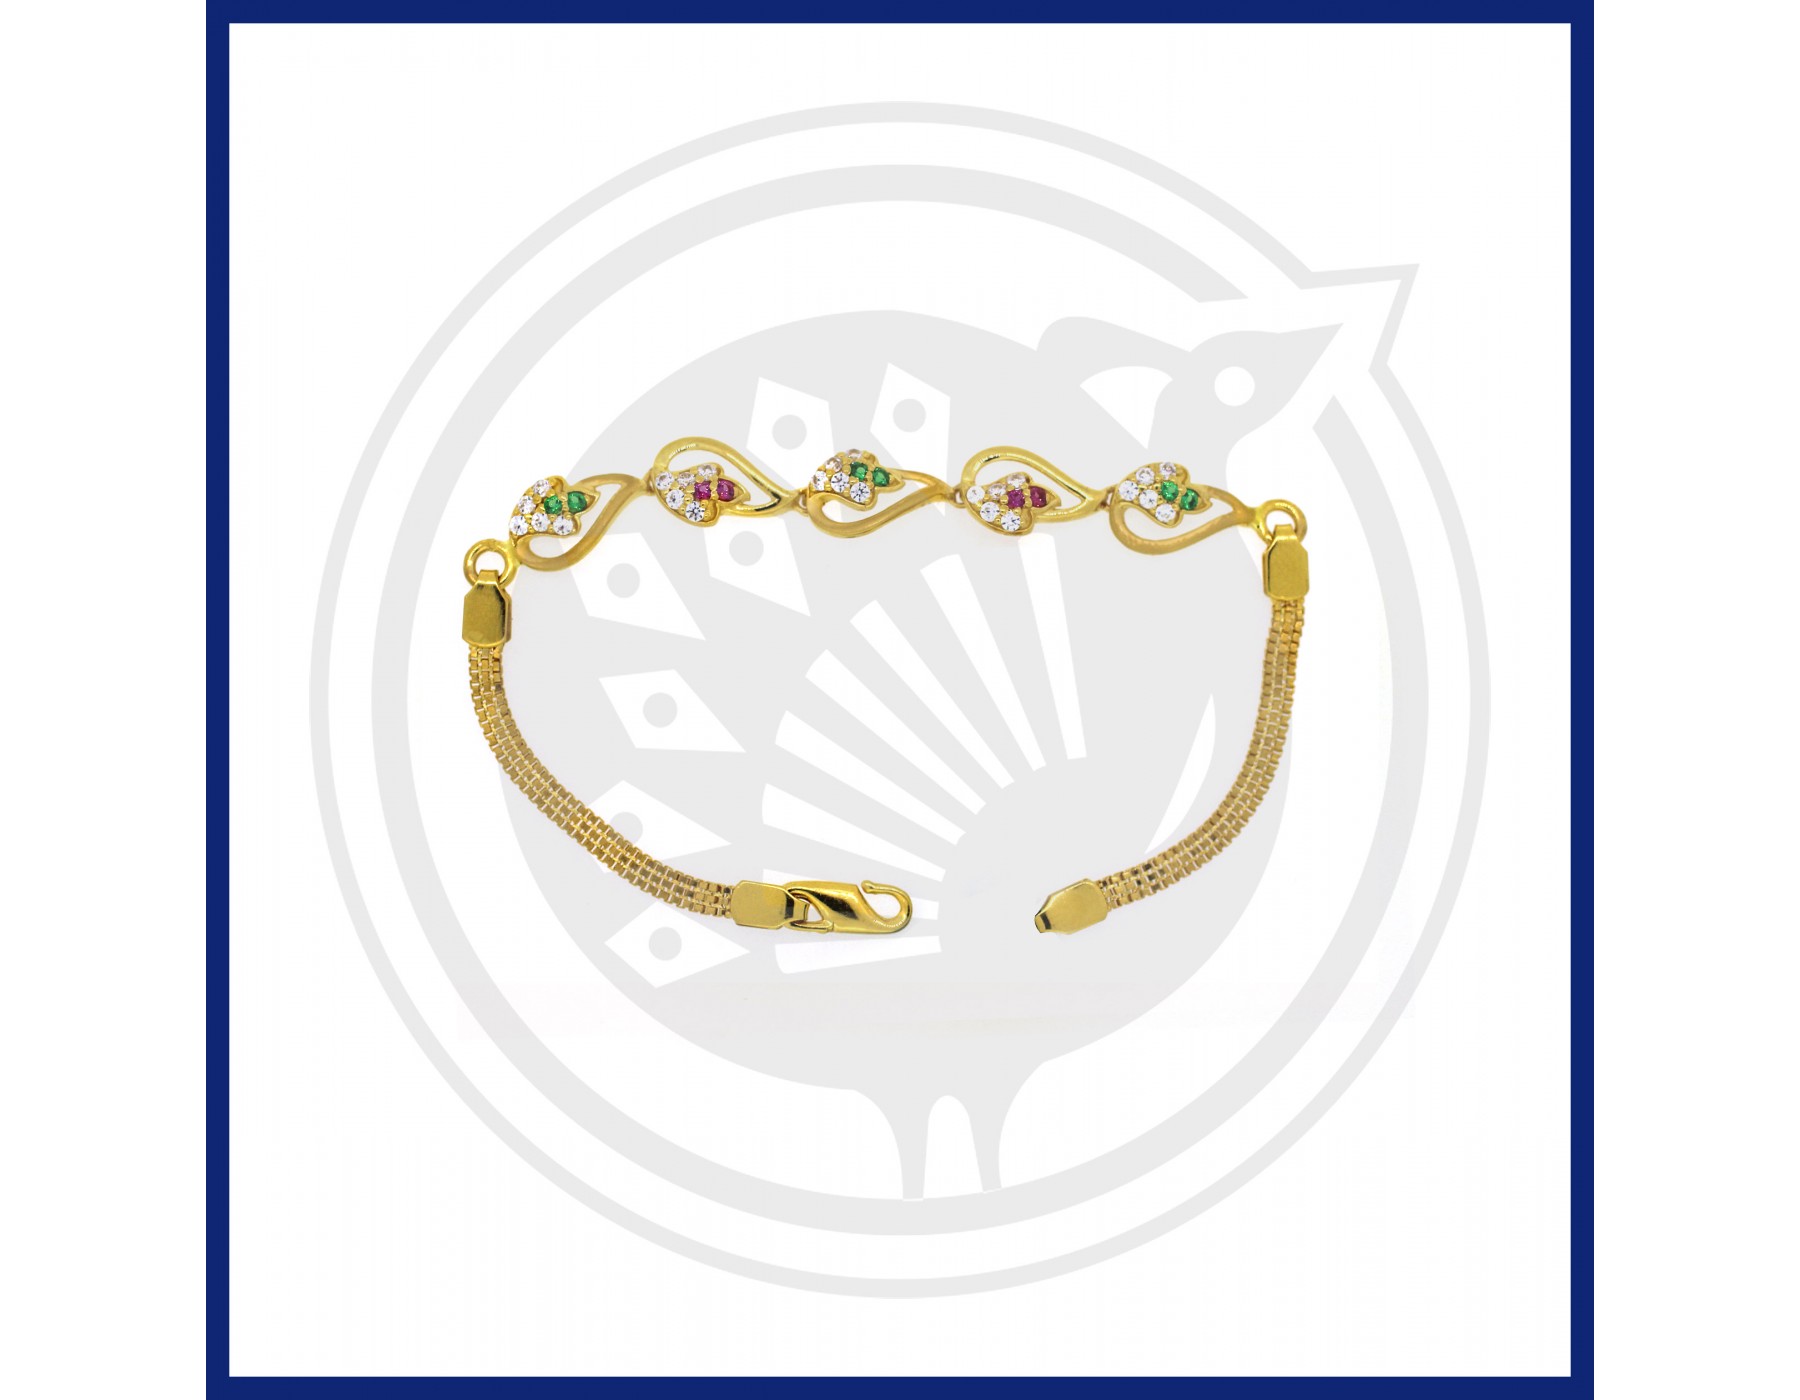 Amazon.com: Classic minimalist Initial Bracelet For Women Girls,18k gold  plated Link Chain Bracelet Dainty Cubic Zircon Letter Initial Bracelet  Jewelry Gift for Women: Clothing, Shoes & Jewelry